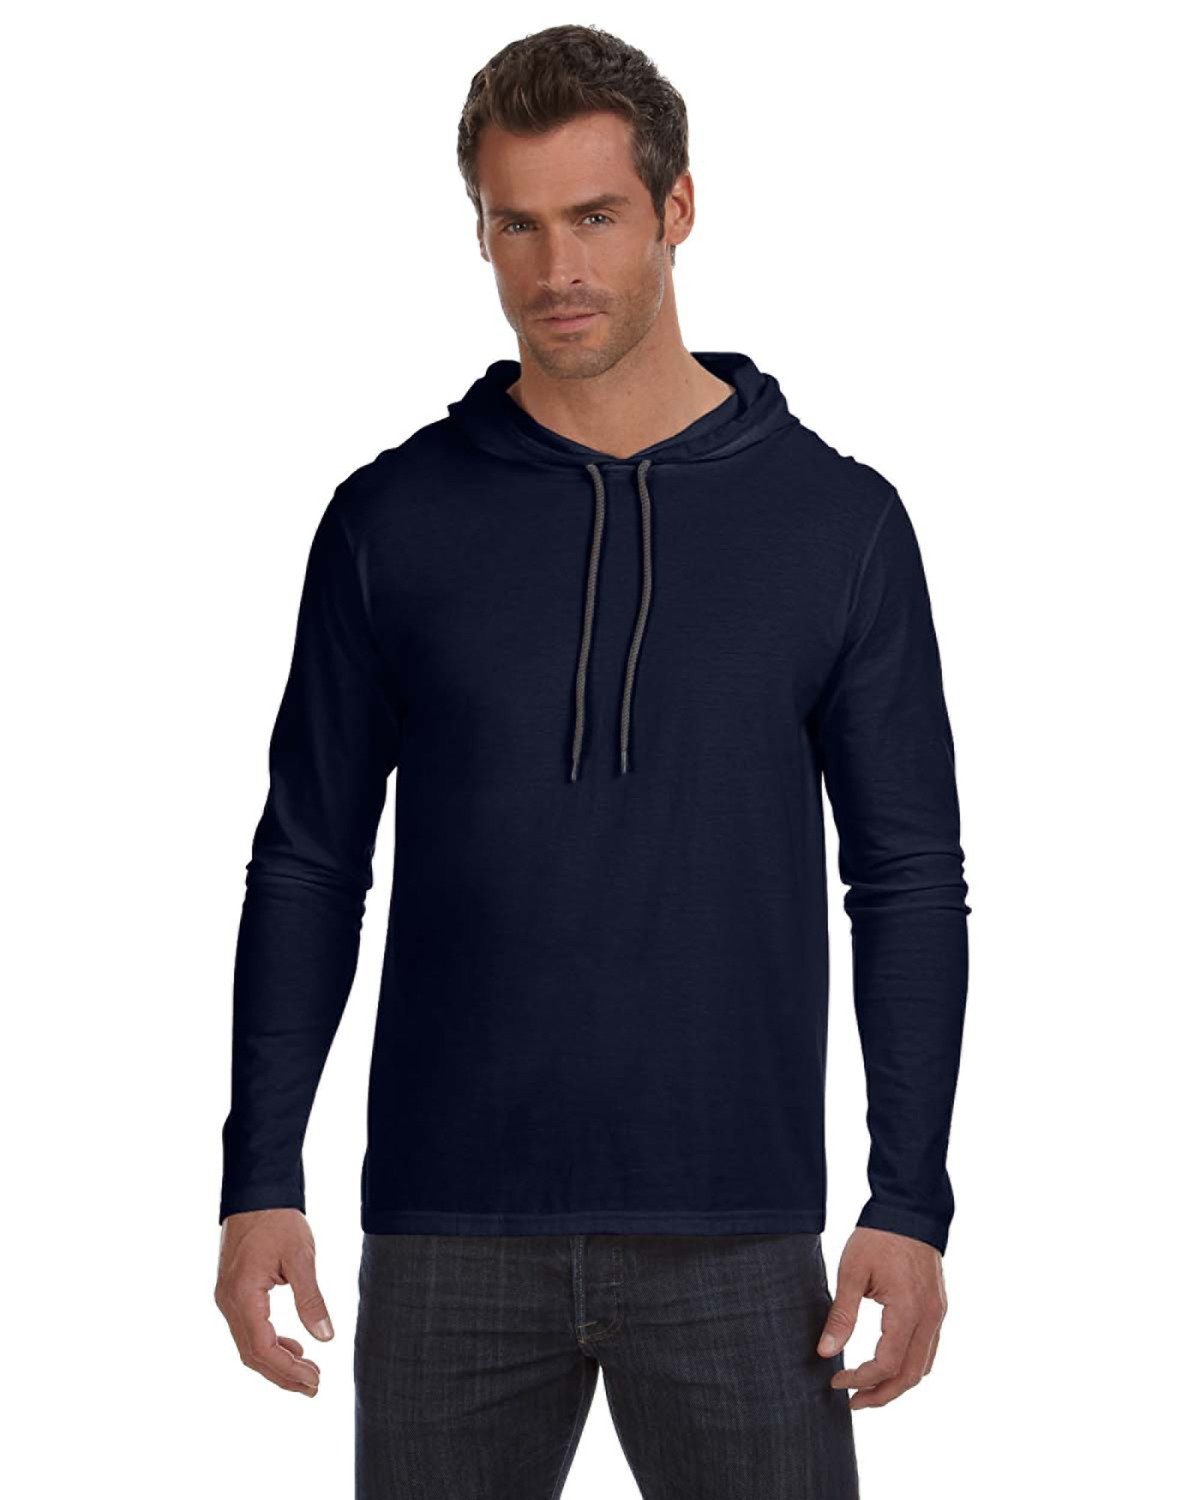 Anvil 987 - Lightweight Long Sleeve Hooded T-Shirt, Navy/ Dark Grey, S